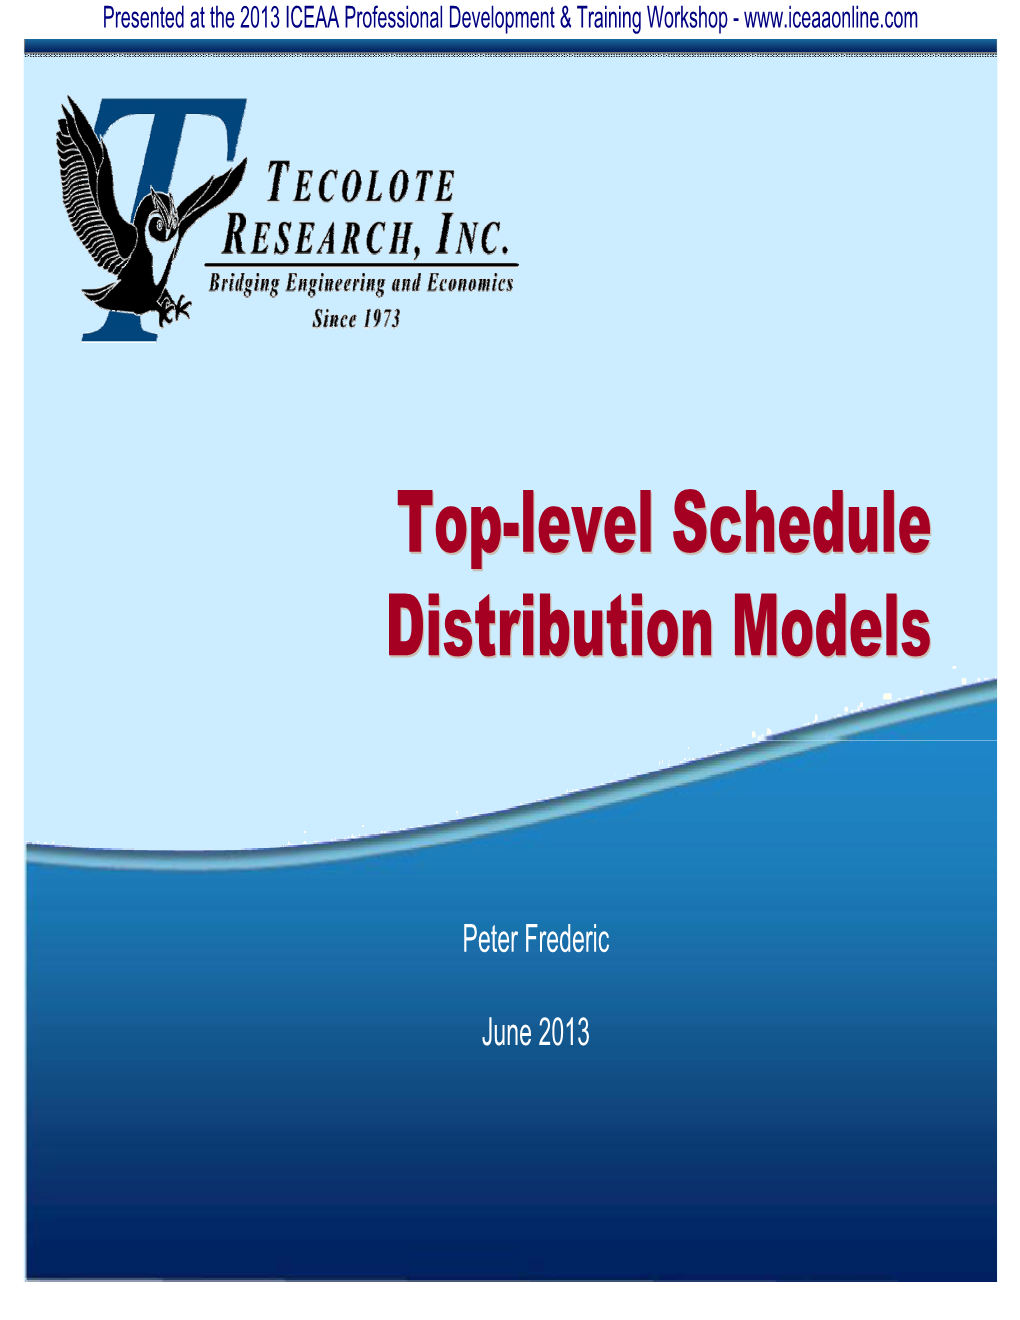 Top-Level Schedule Distribution Models Top-Level Schedule